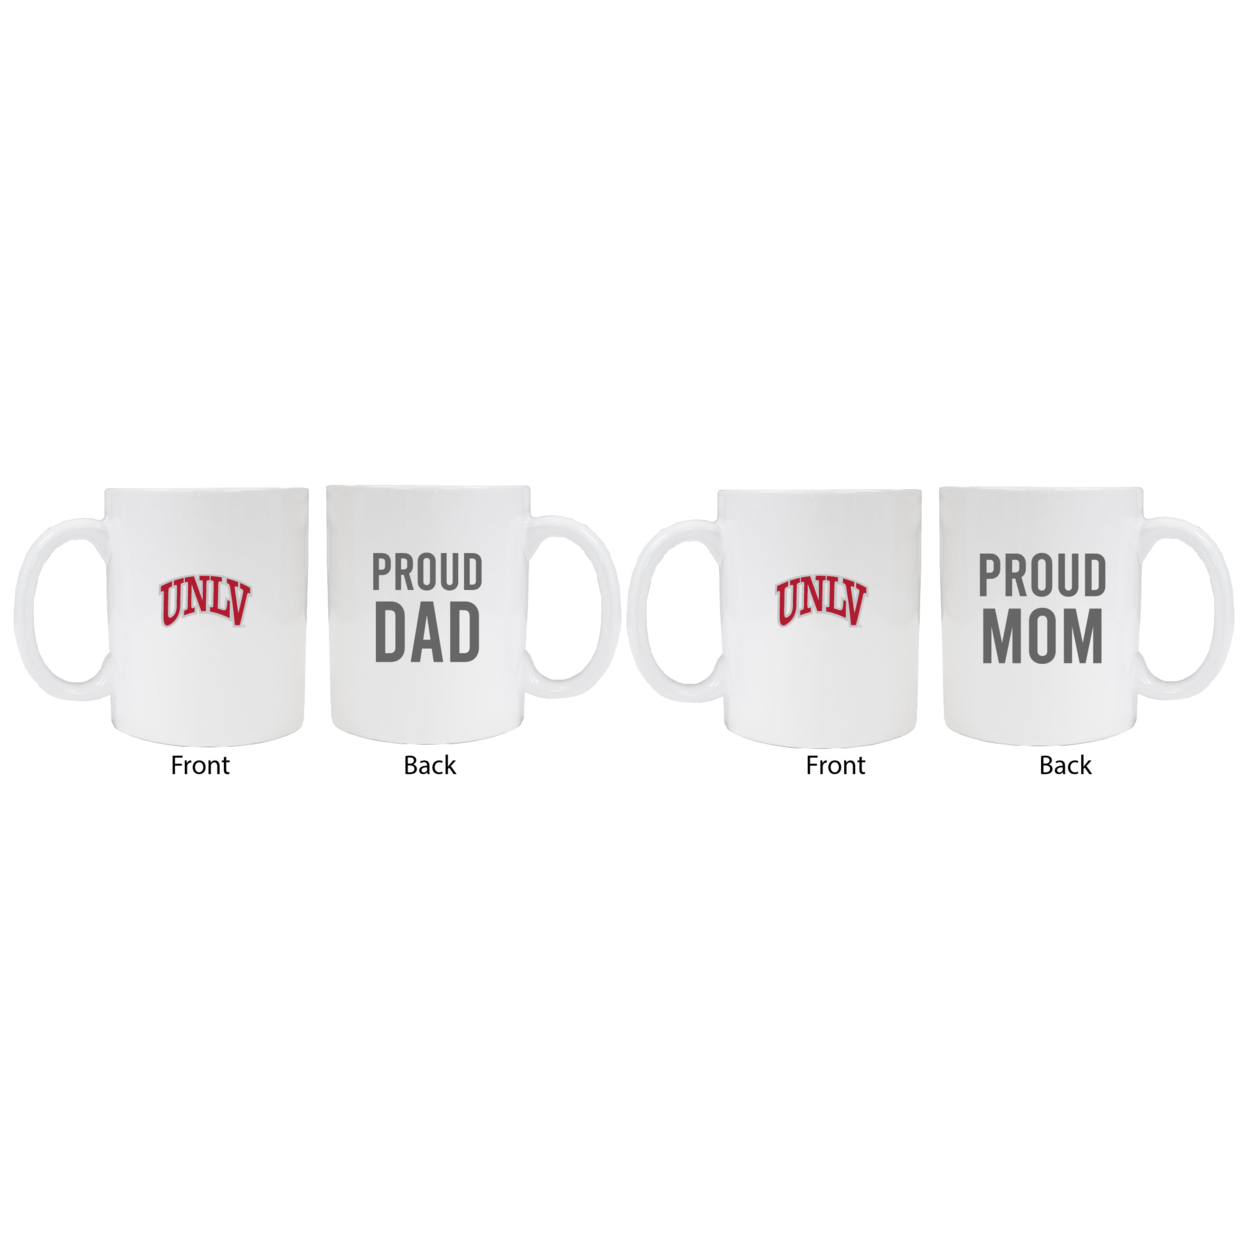 UNLV Rebels Proud Mom And Dad White Ceramic Coffee Mug 2 Pack (White).